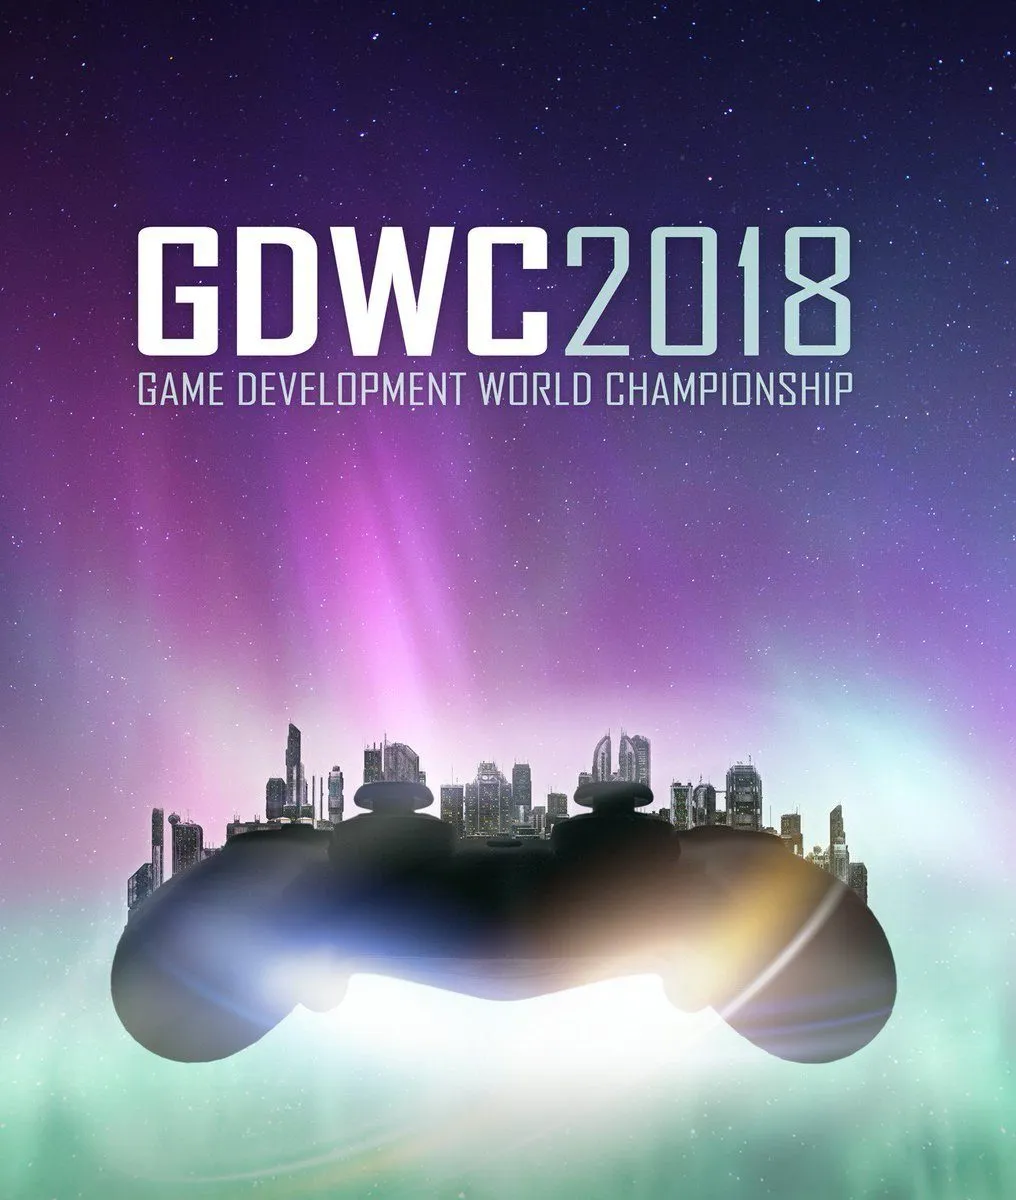 GDWC 2018